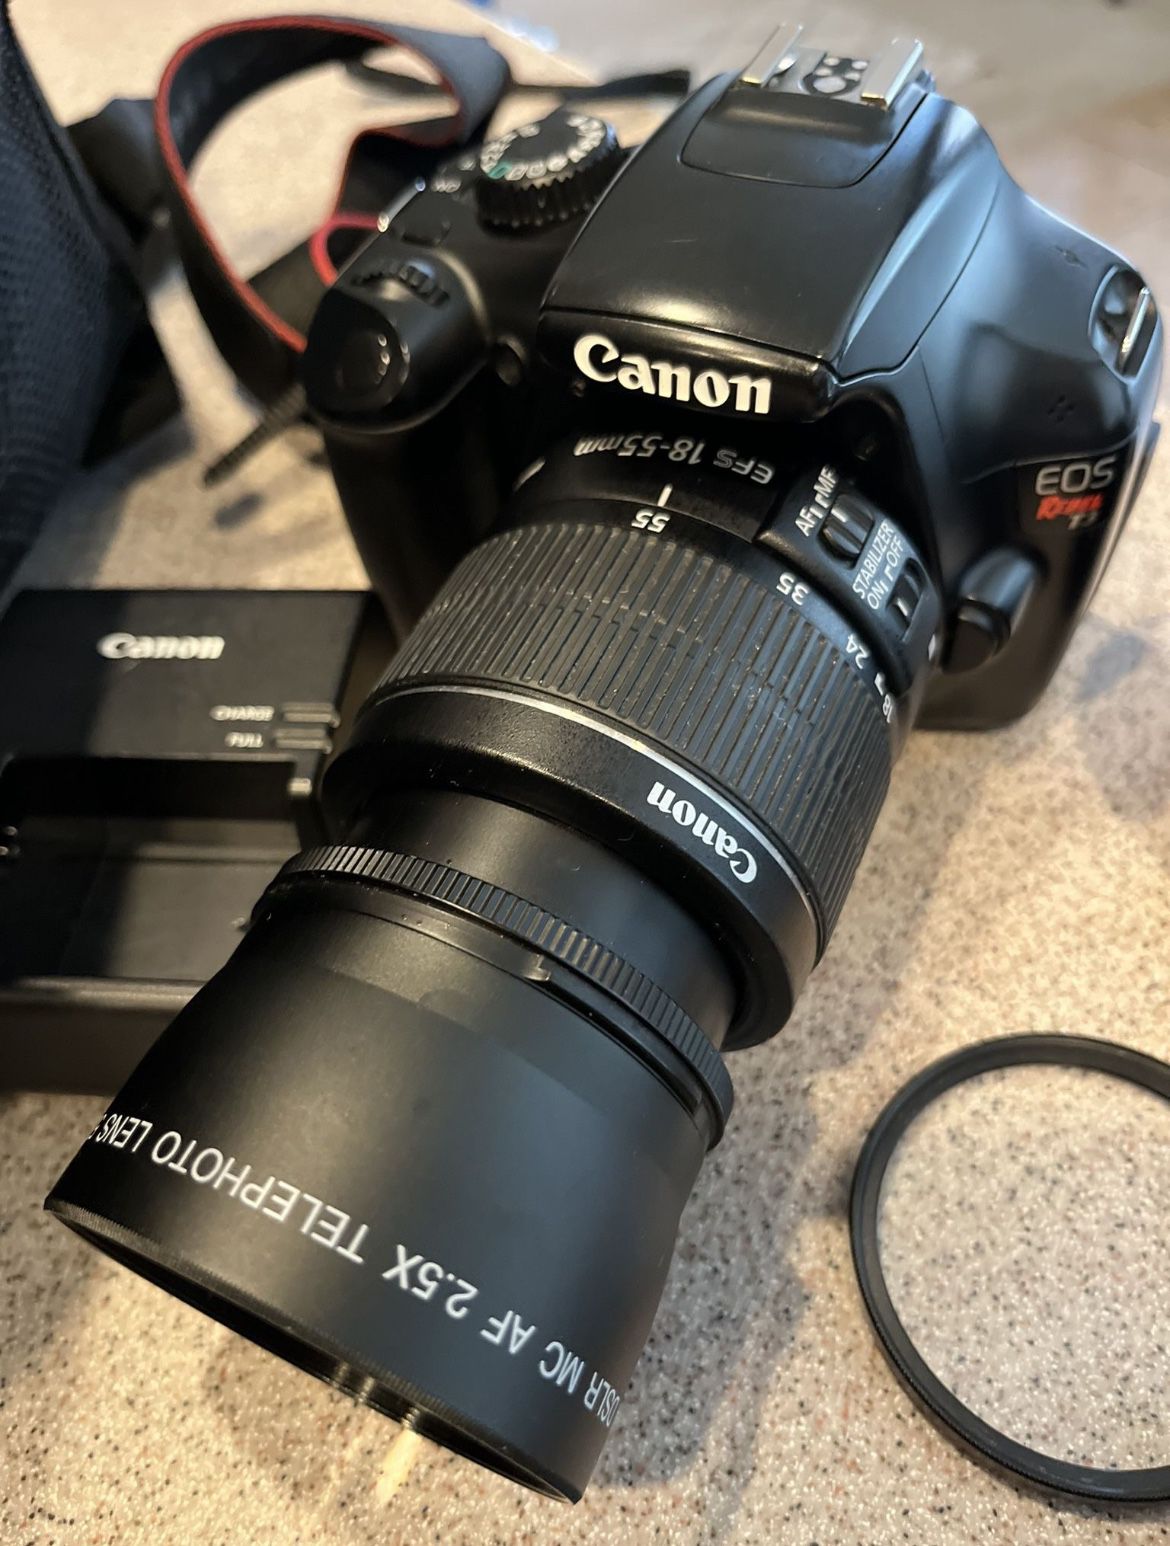 Professional Canon Camera & 3 Lenses